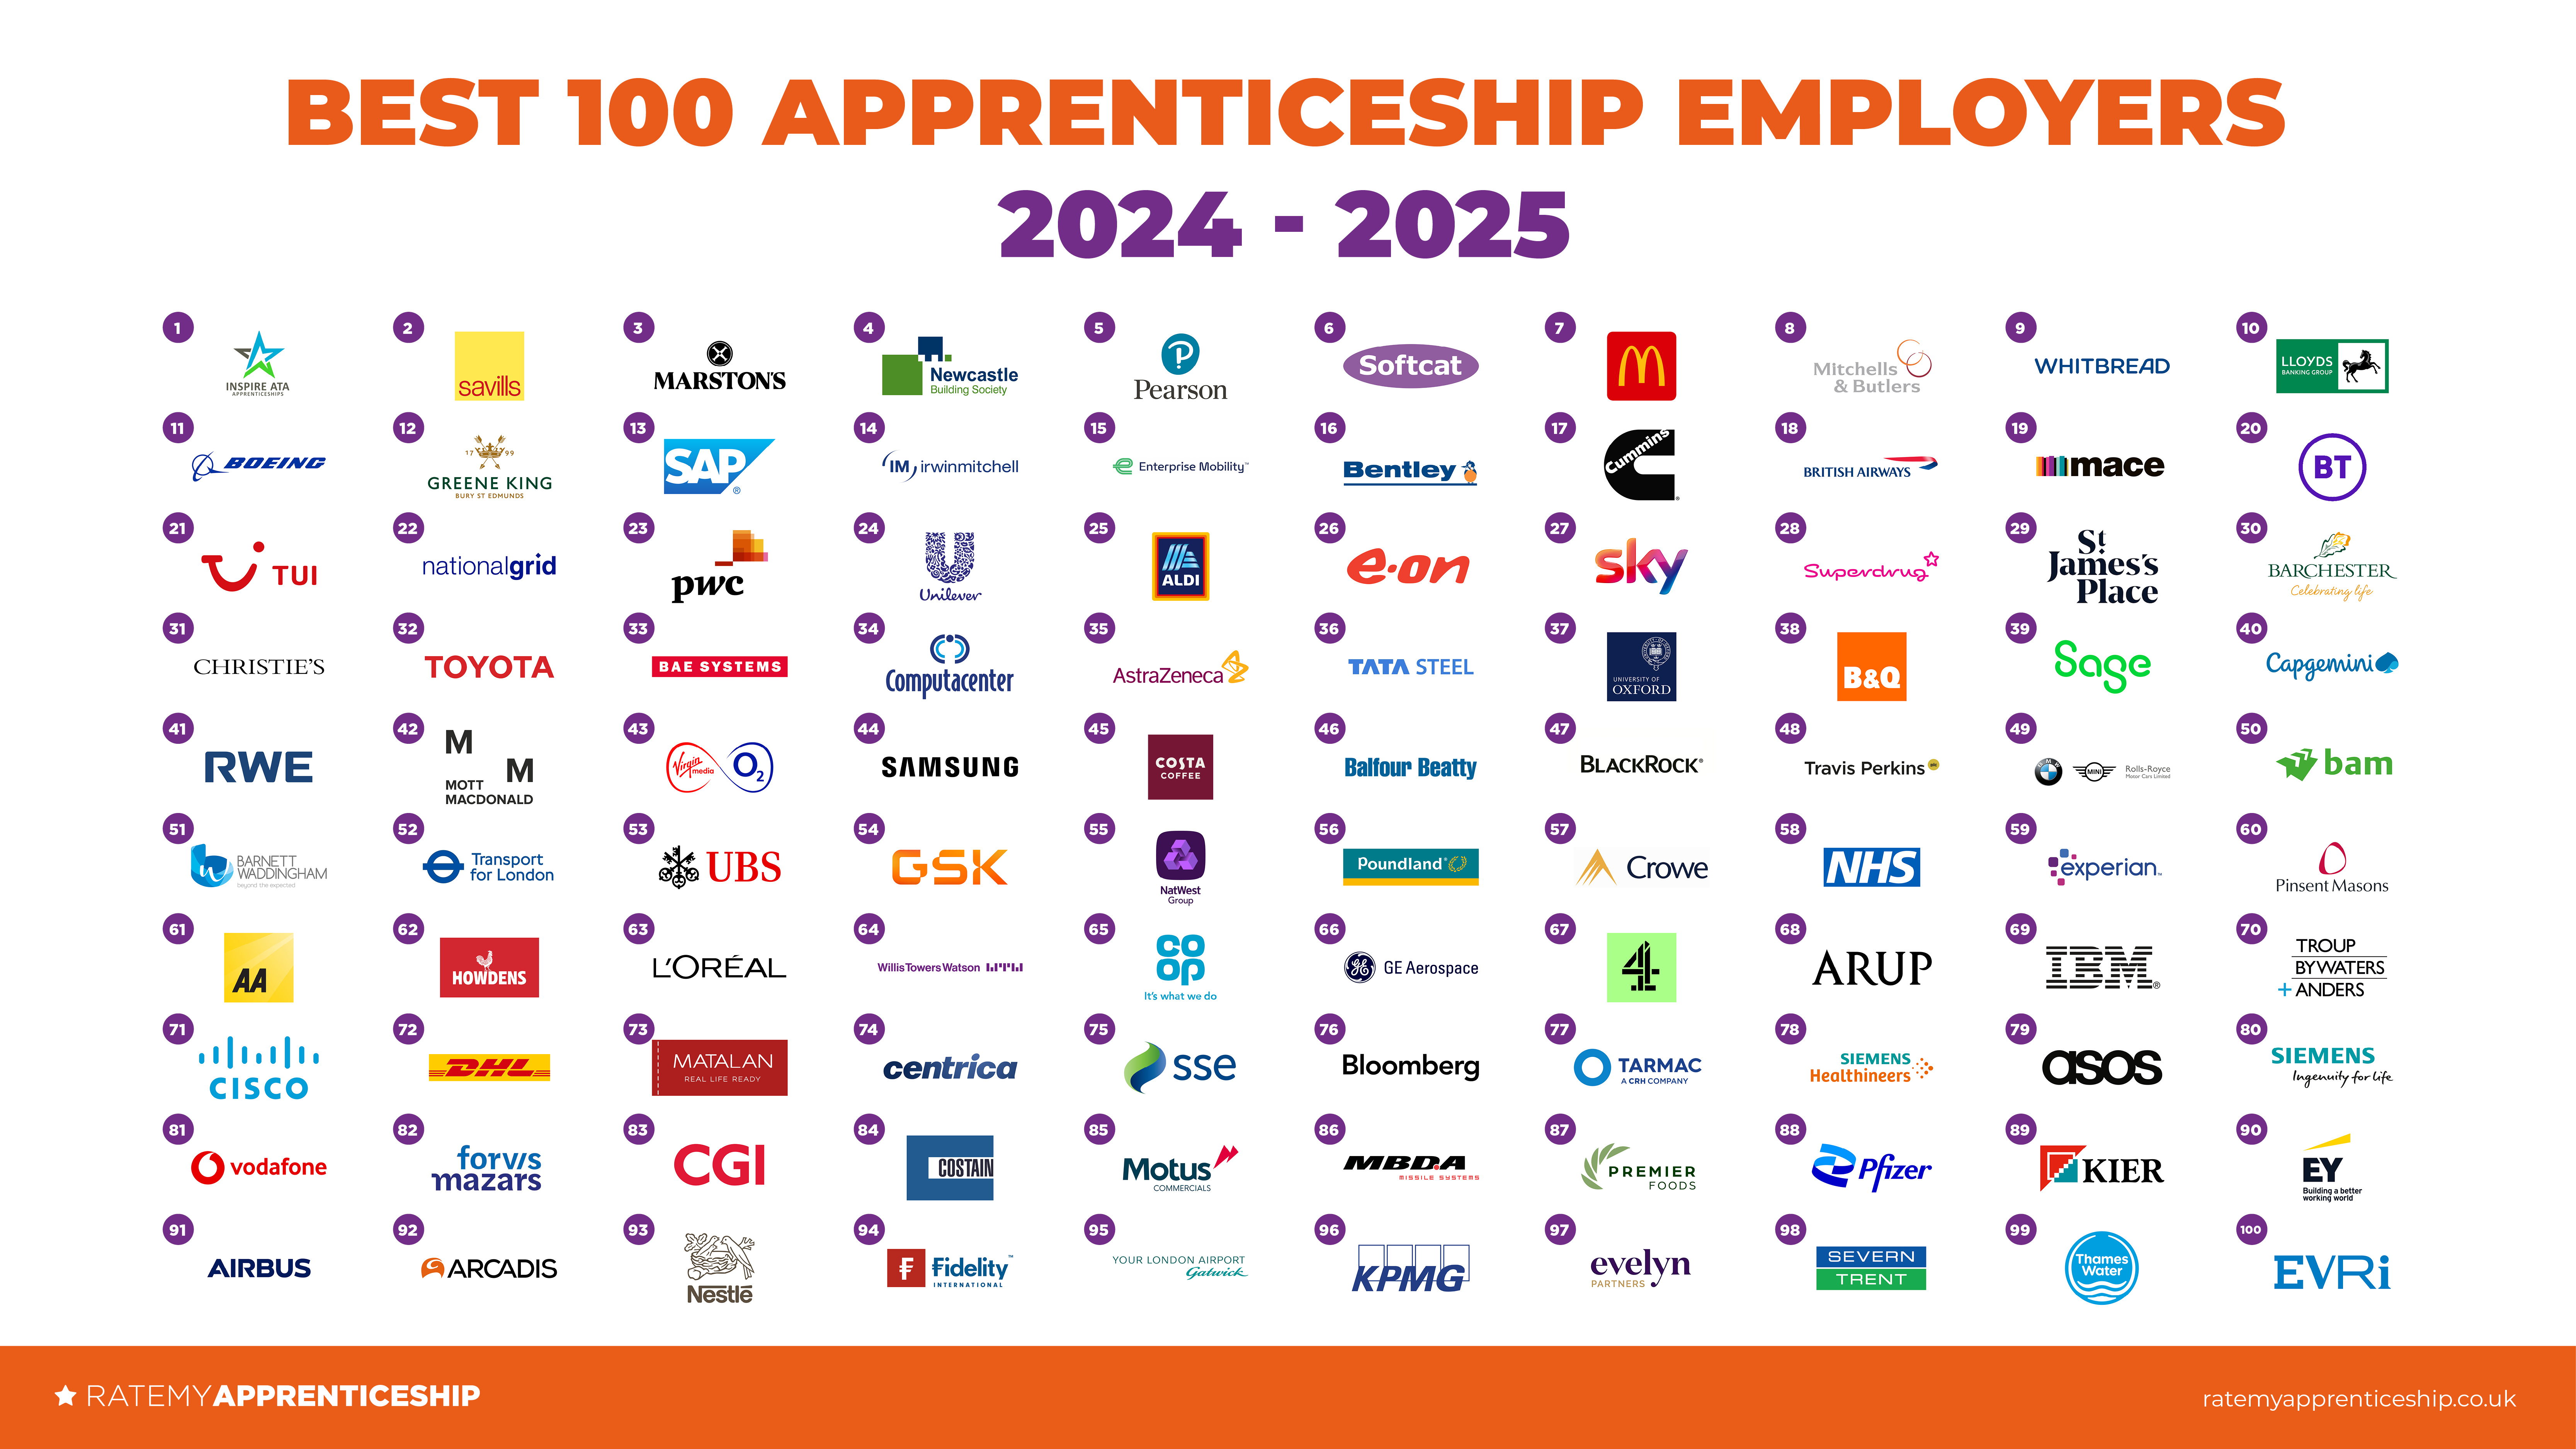 Top 10 best apprenticeship employers in the UK